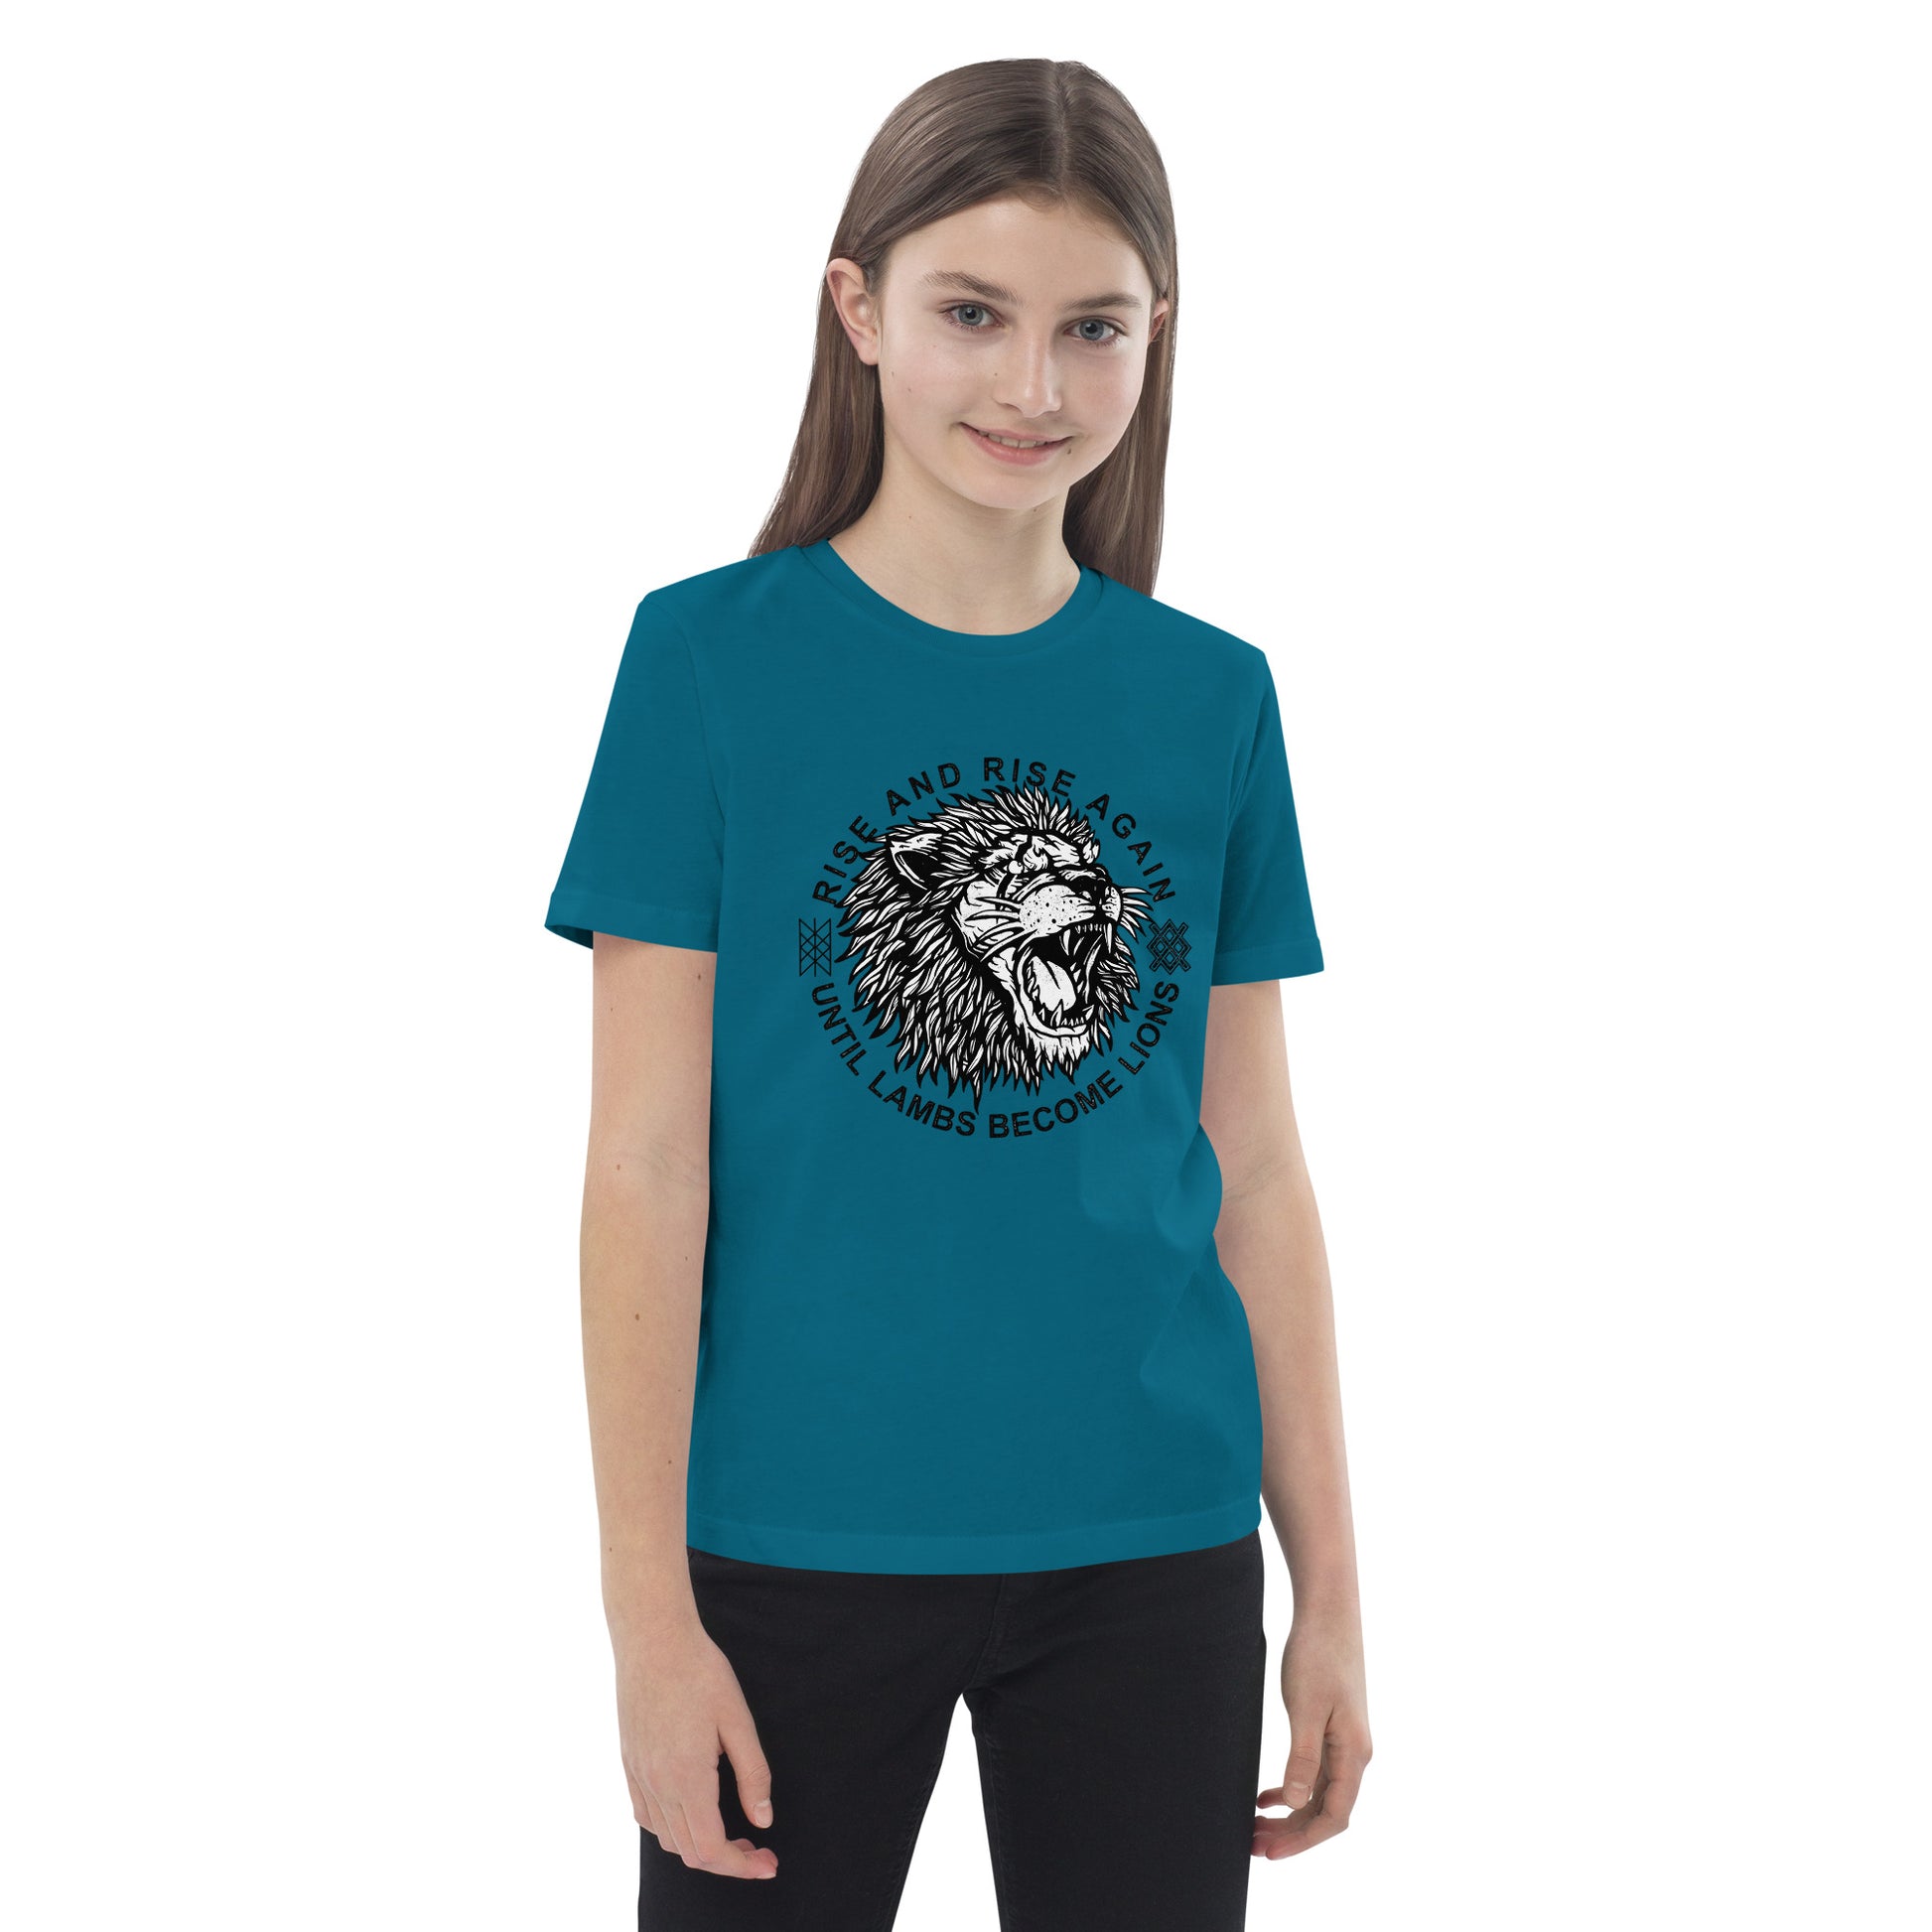 Lion organic cotton kids t-shirt - V Development Group